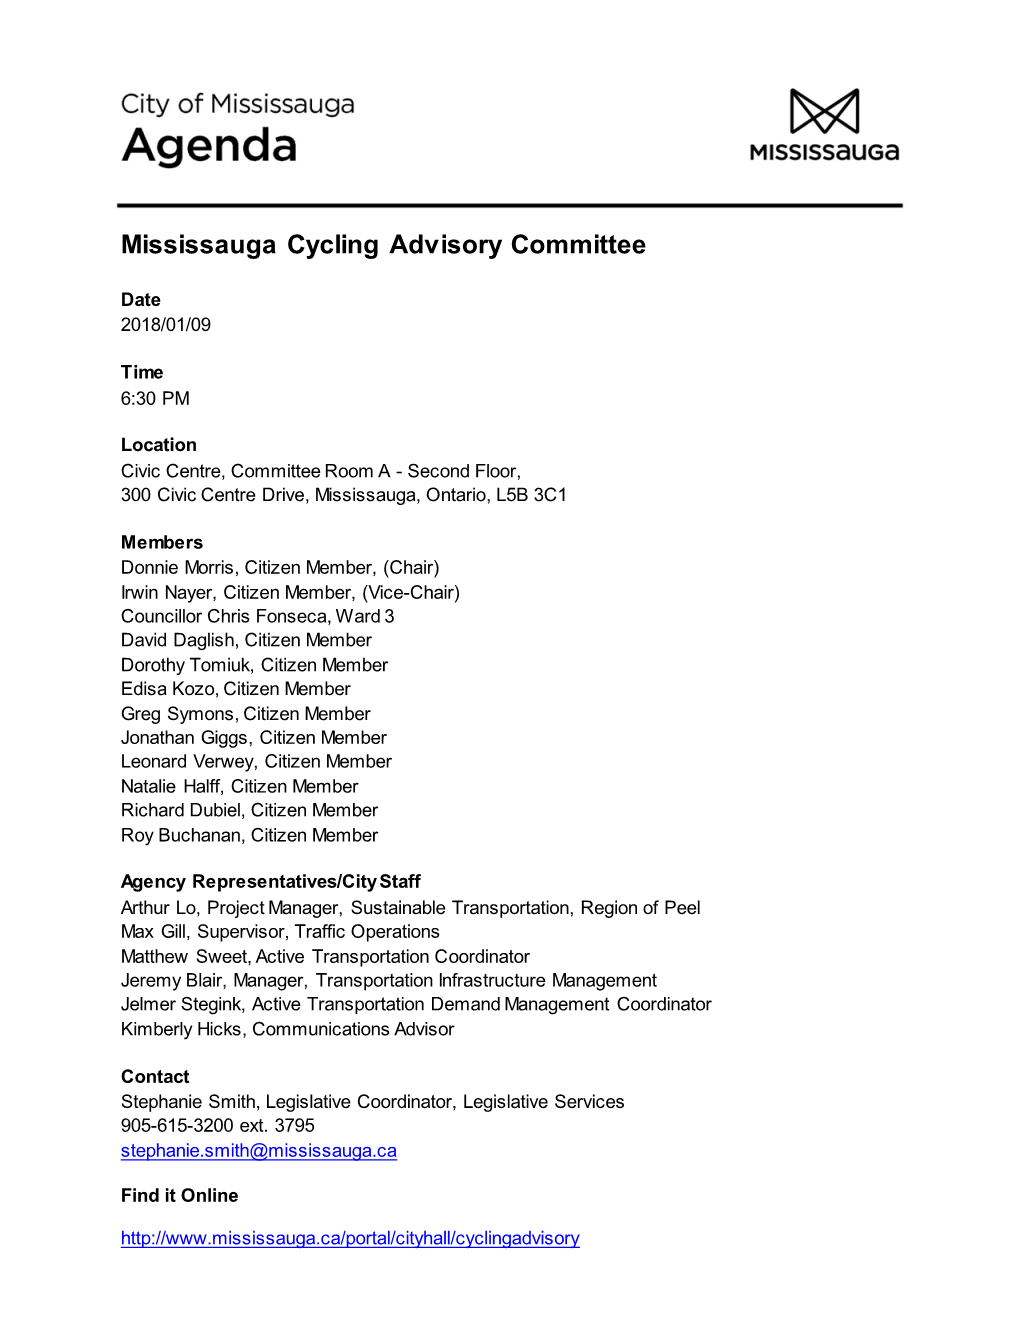 Mississauga Cycling Advisory Committee Agenda